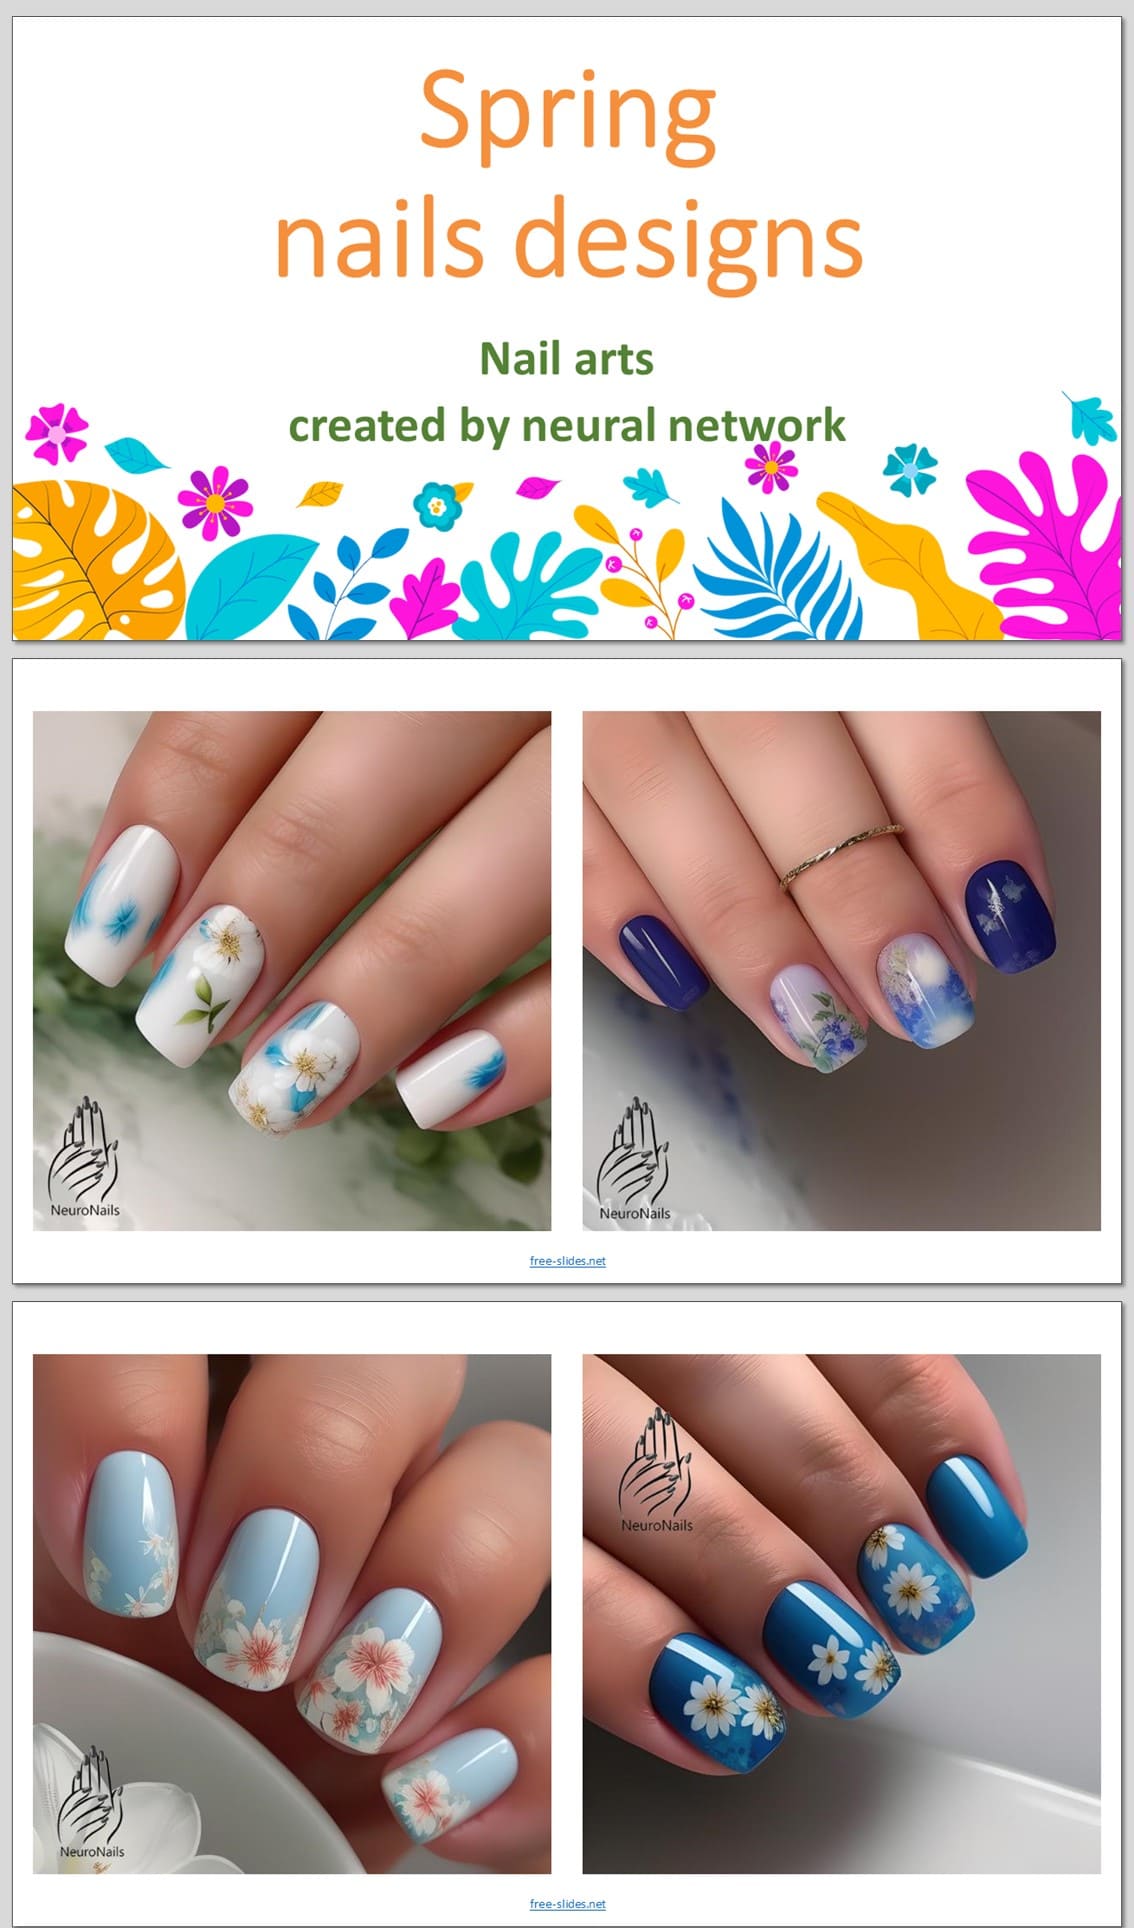 Neural network creates spring nail designs